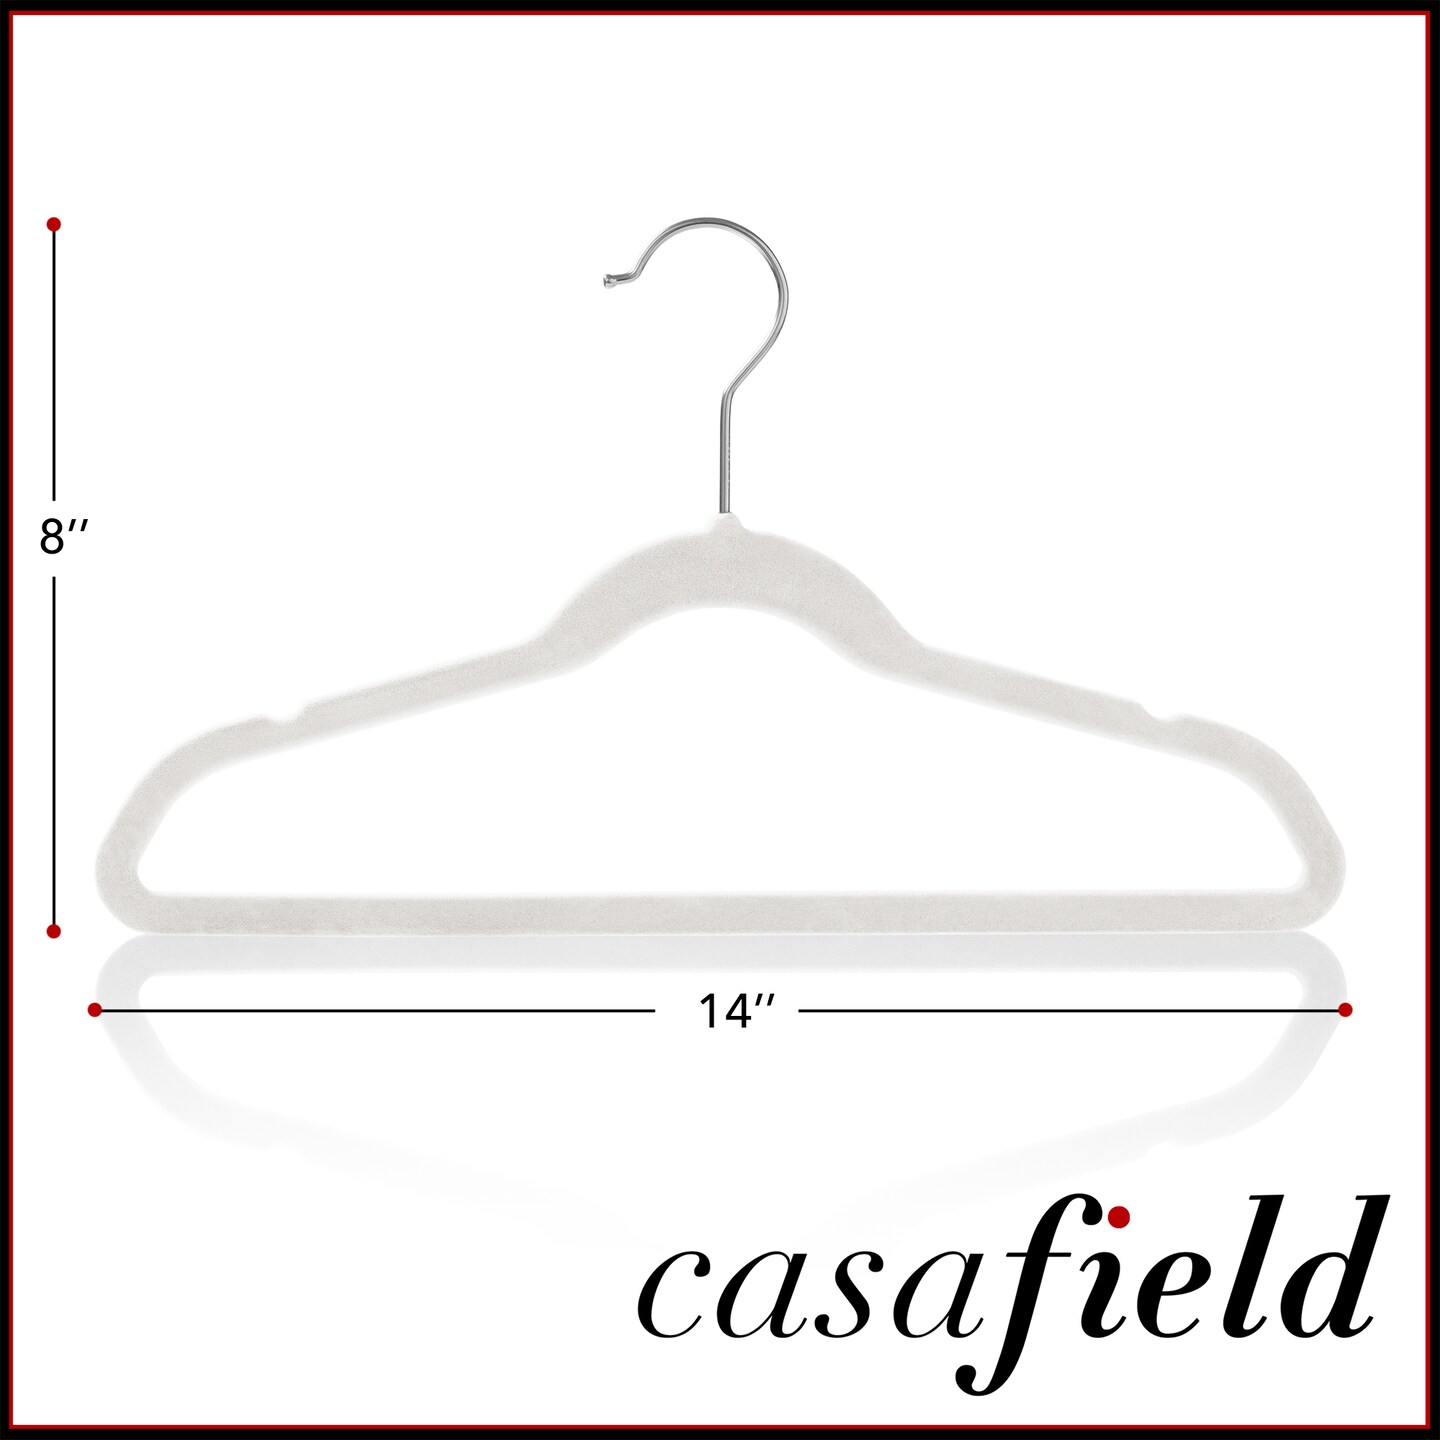 Casafield 50 Velvet Kid&#x27;s Hangers - 14&#x22; Size for Children&#x27;s Clothes